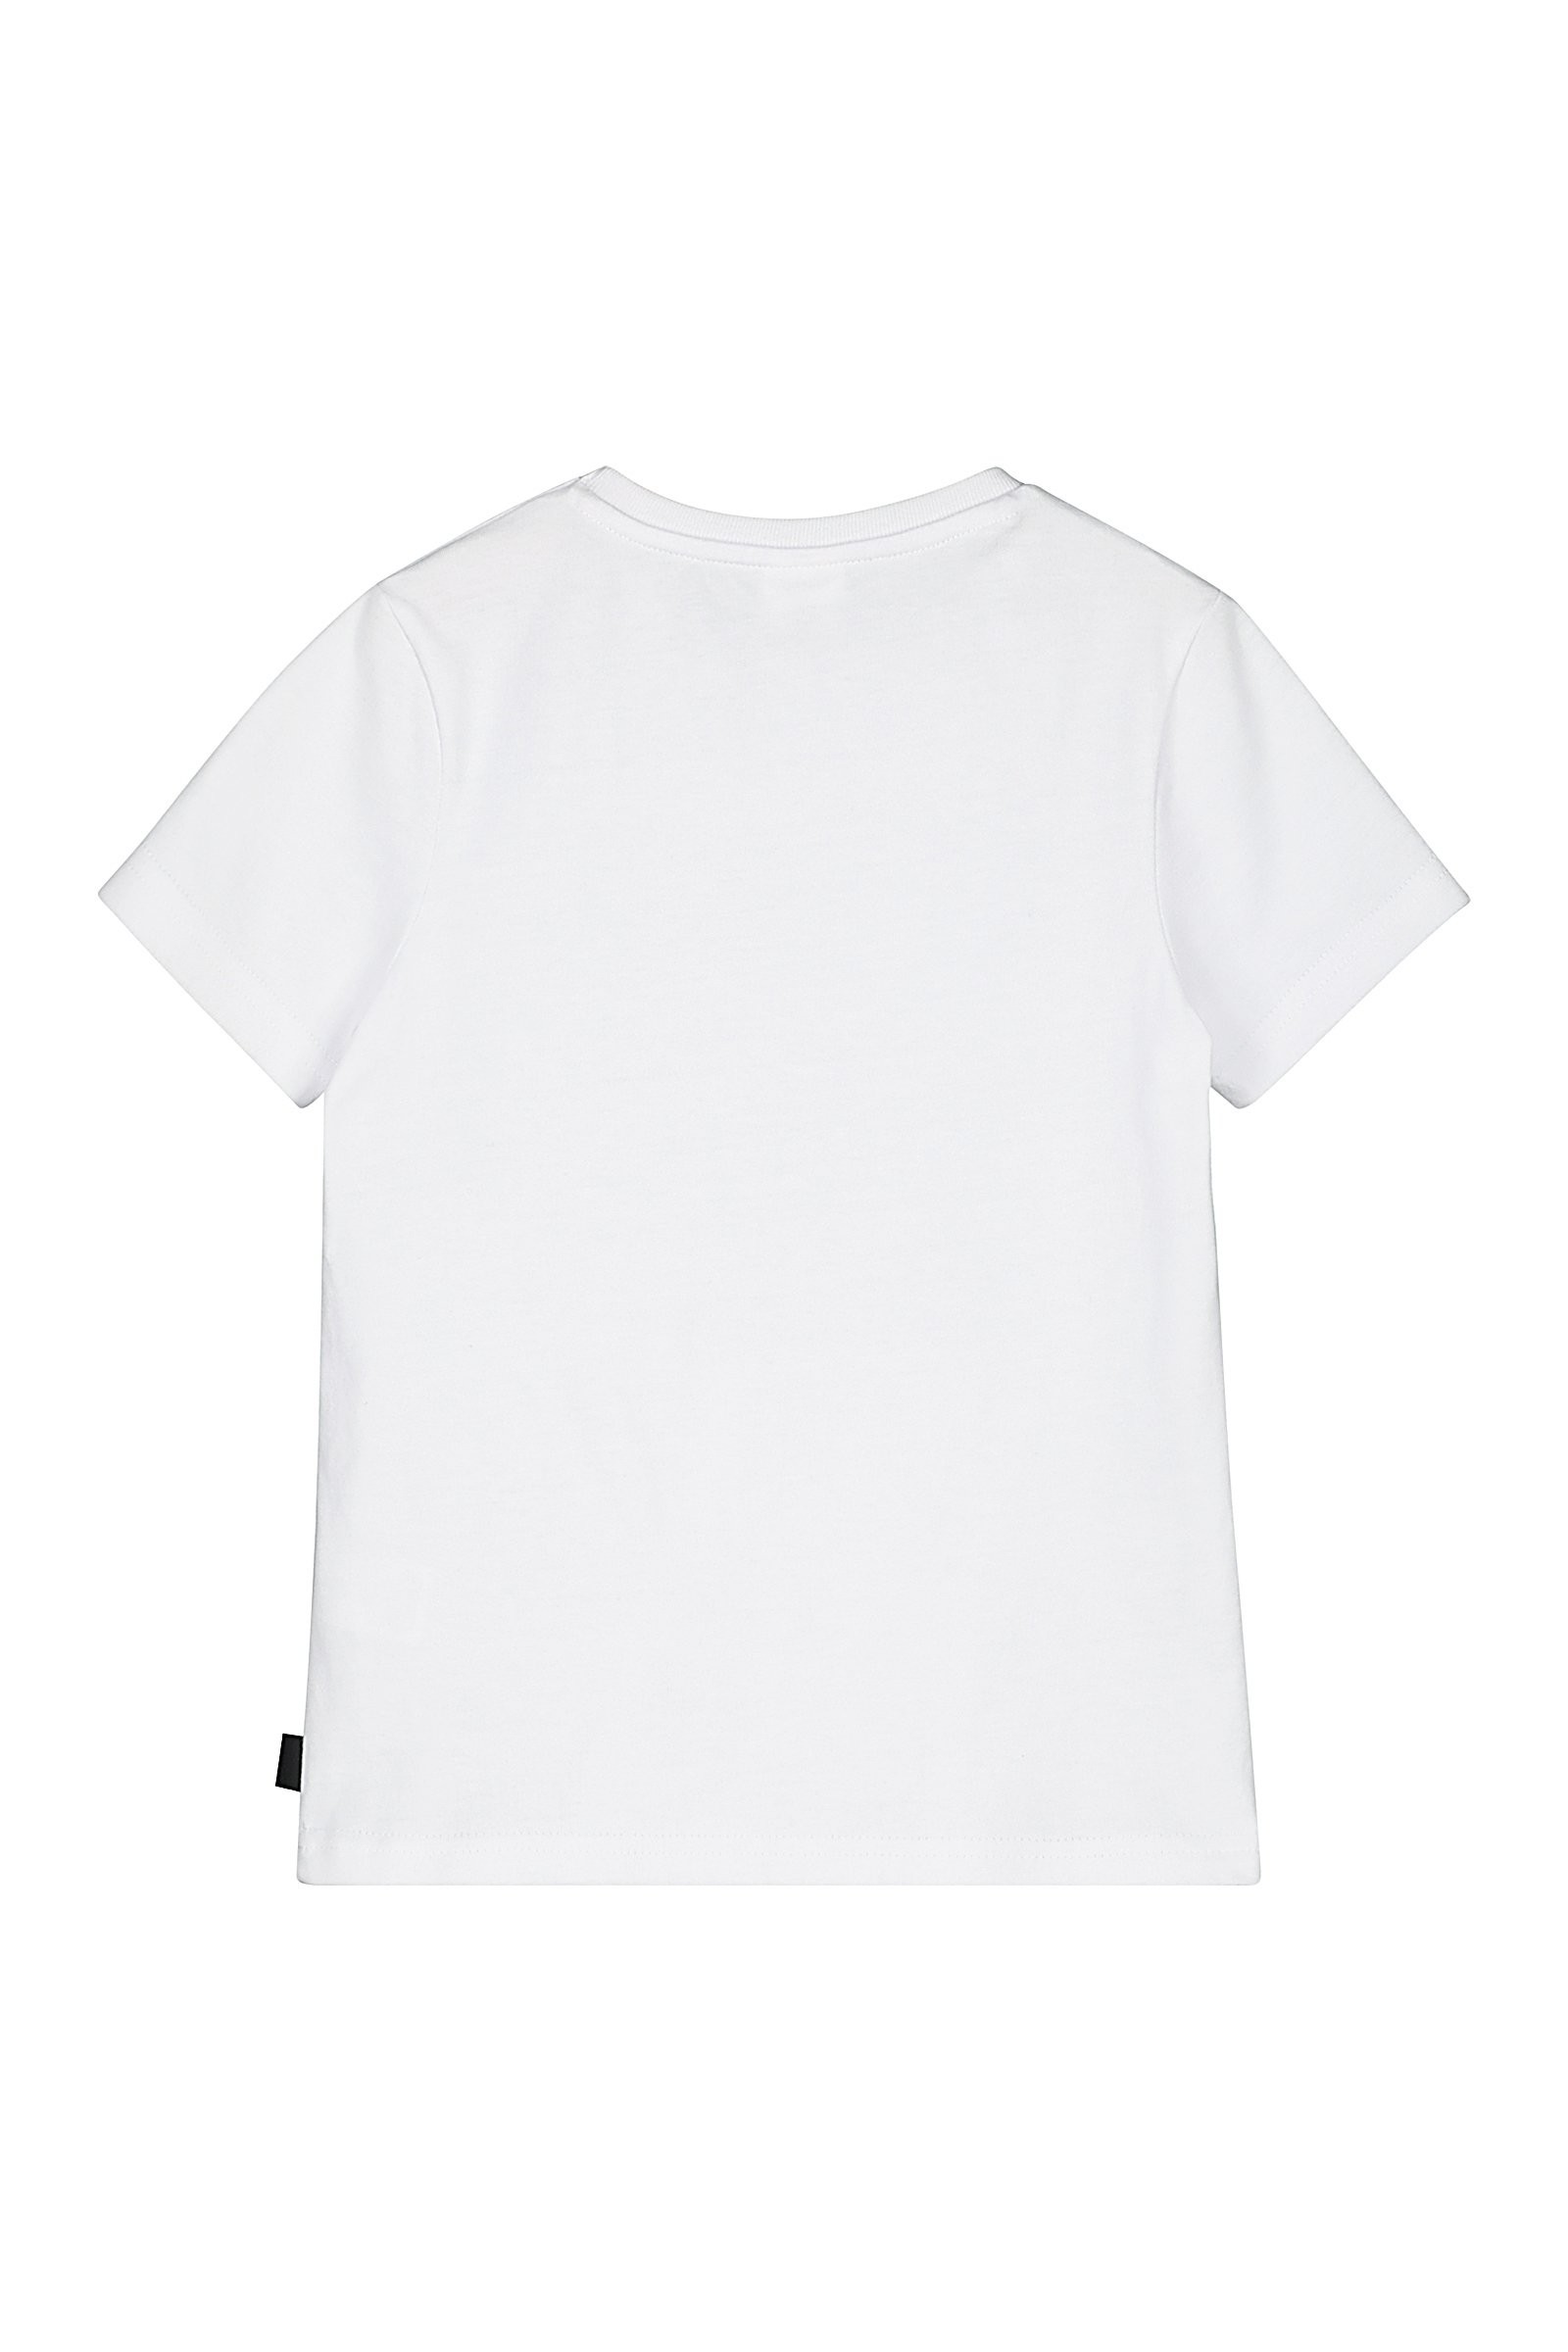 CKS Kids - YIGGE - t-shirt à manches courtes - blanc